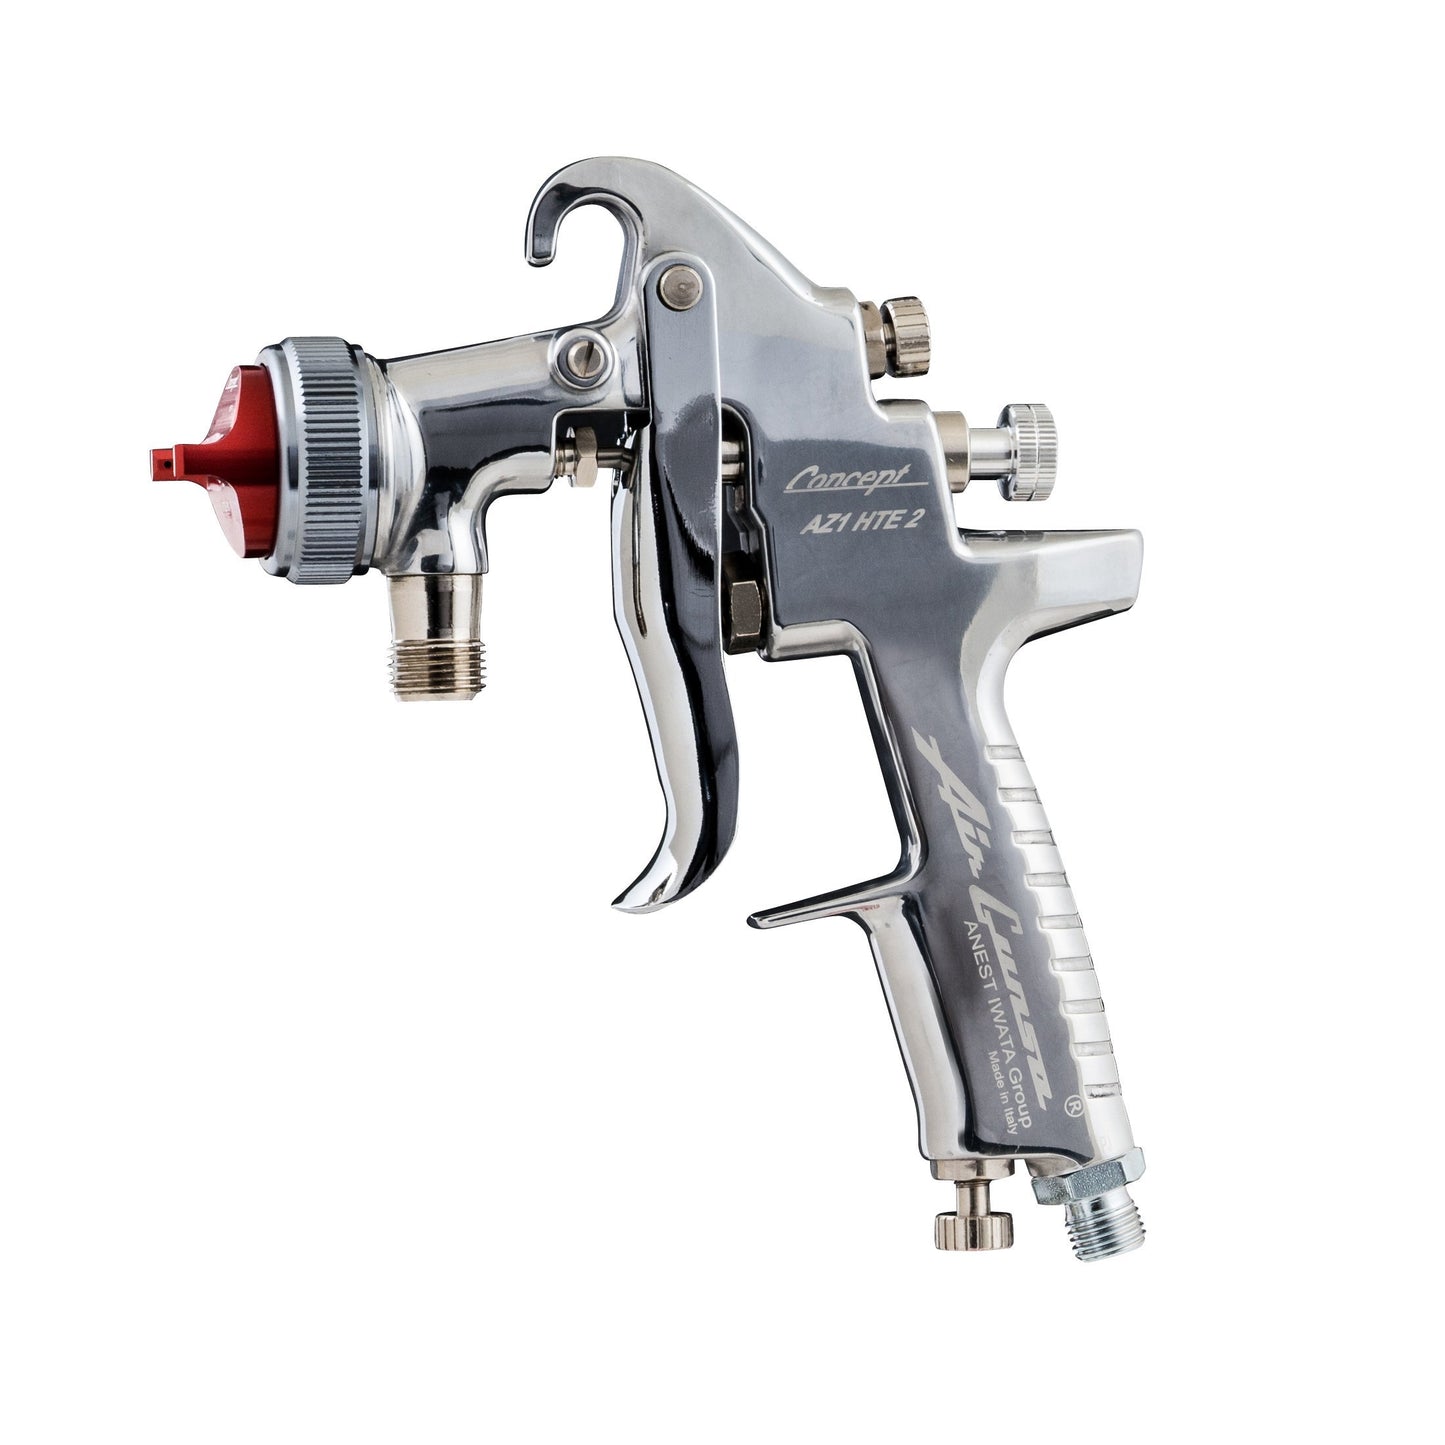 Anest Iwata Concept AZ1 HTE Pressure Feed Spray Paint Gun 1.5mm